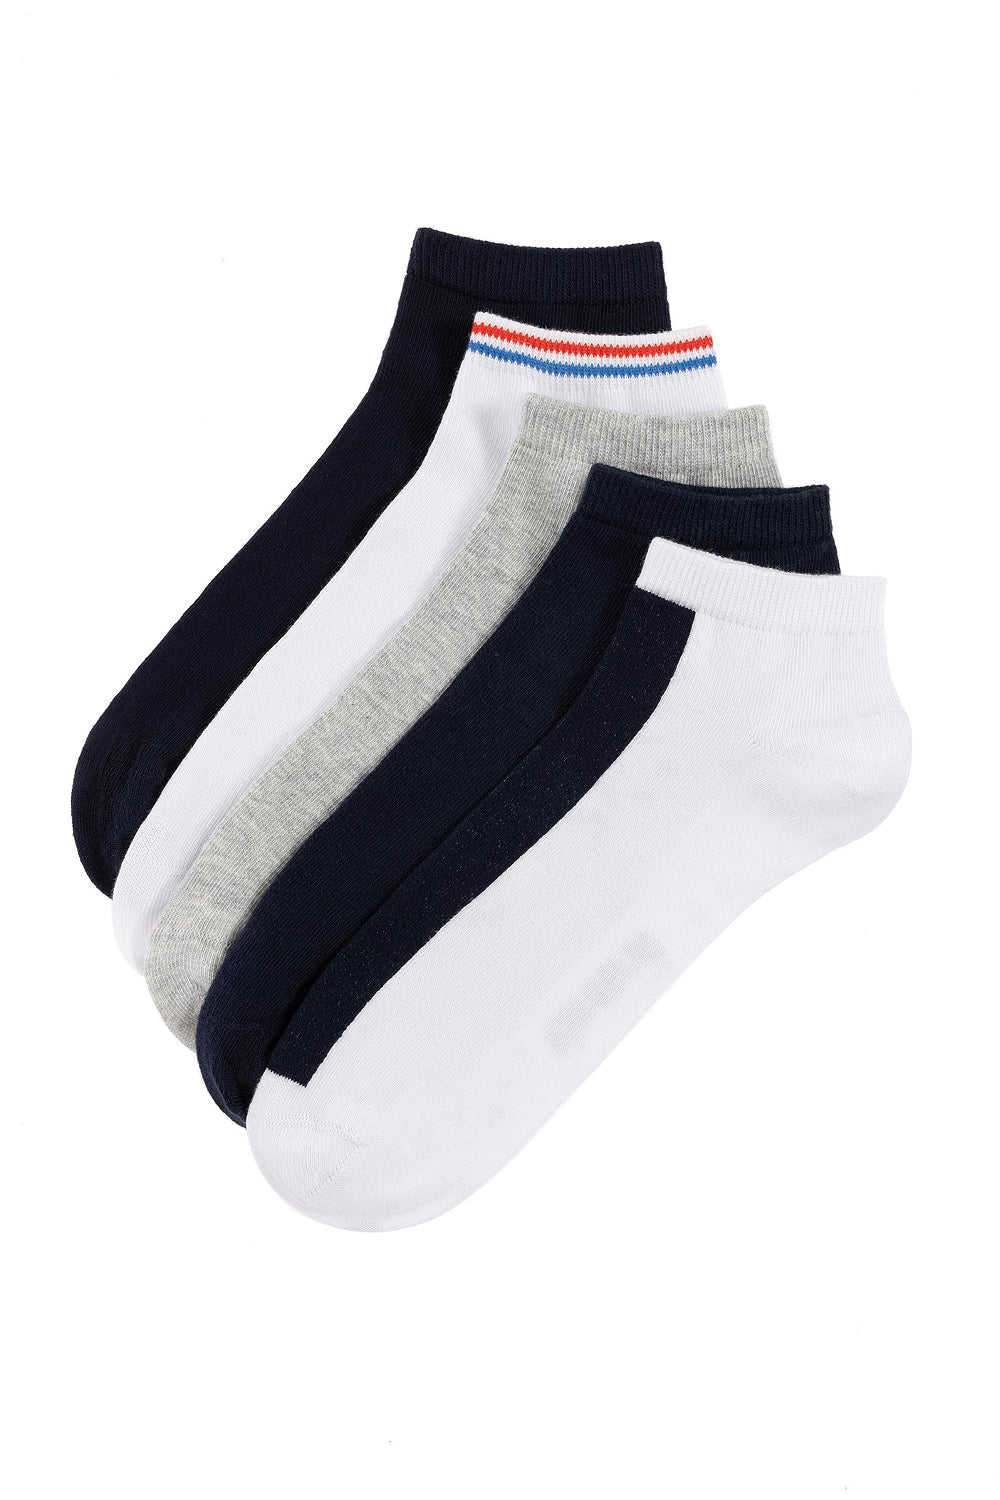 4-Pack Multi-Color Ankle Socks